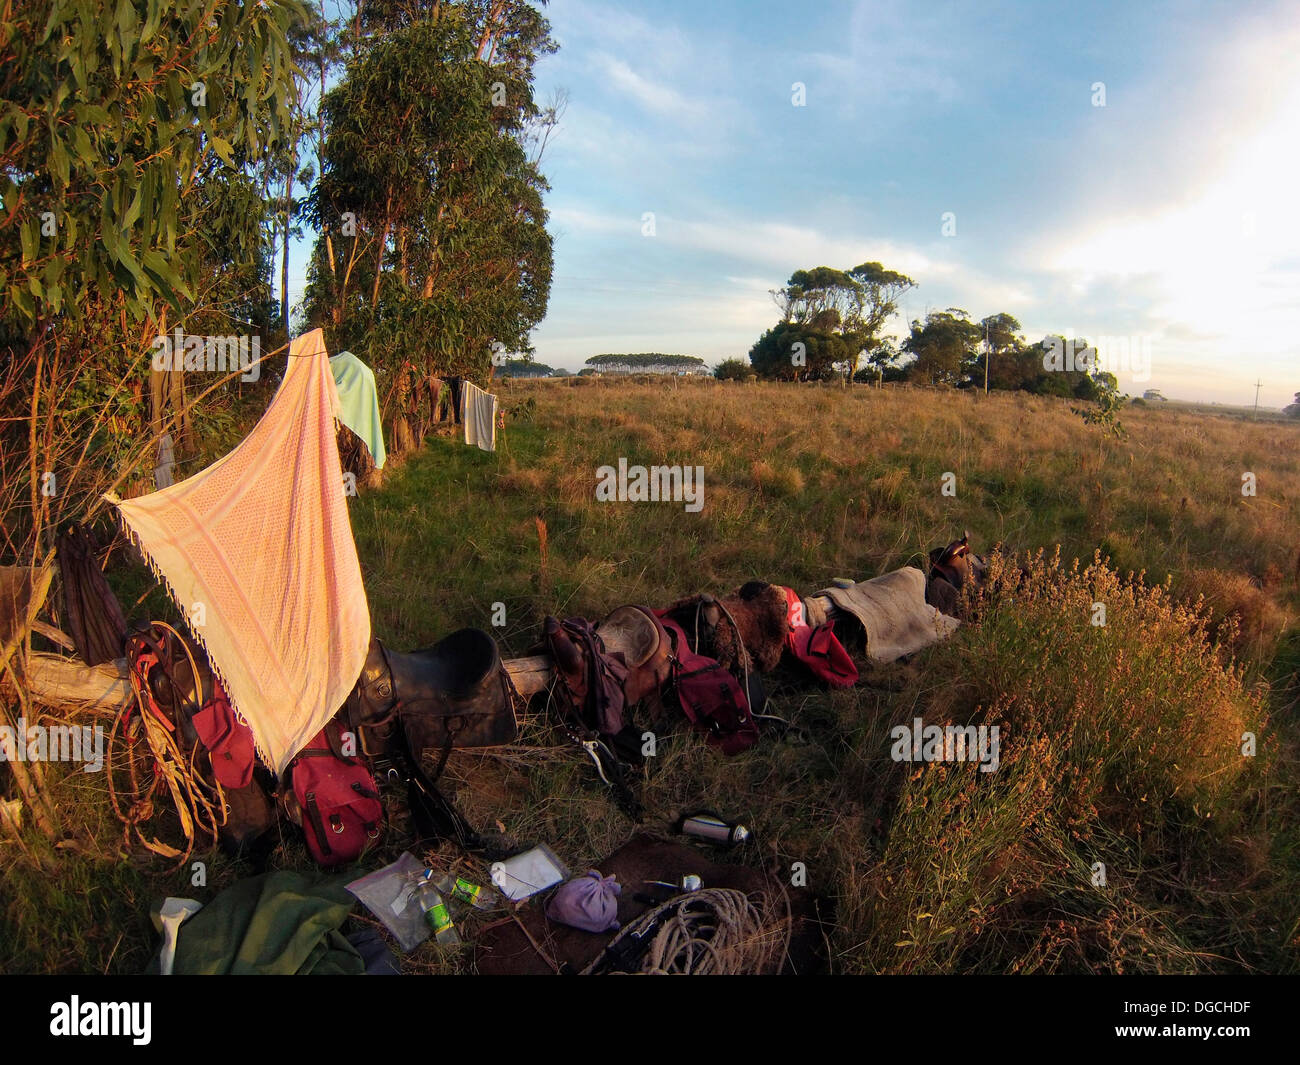 L'équipement de camping dans le champ, l'Uruguay Banque D'Images